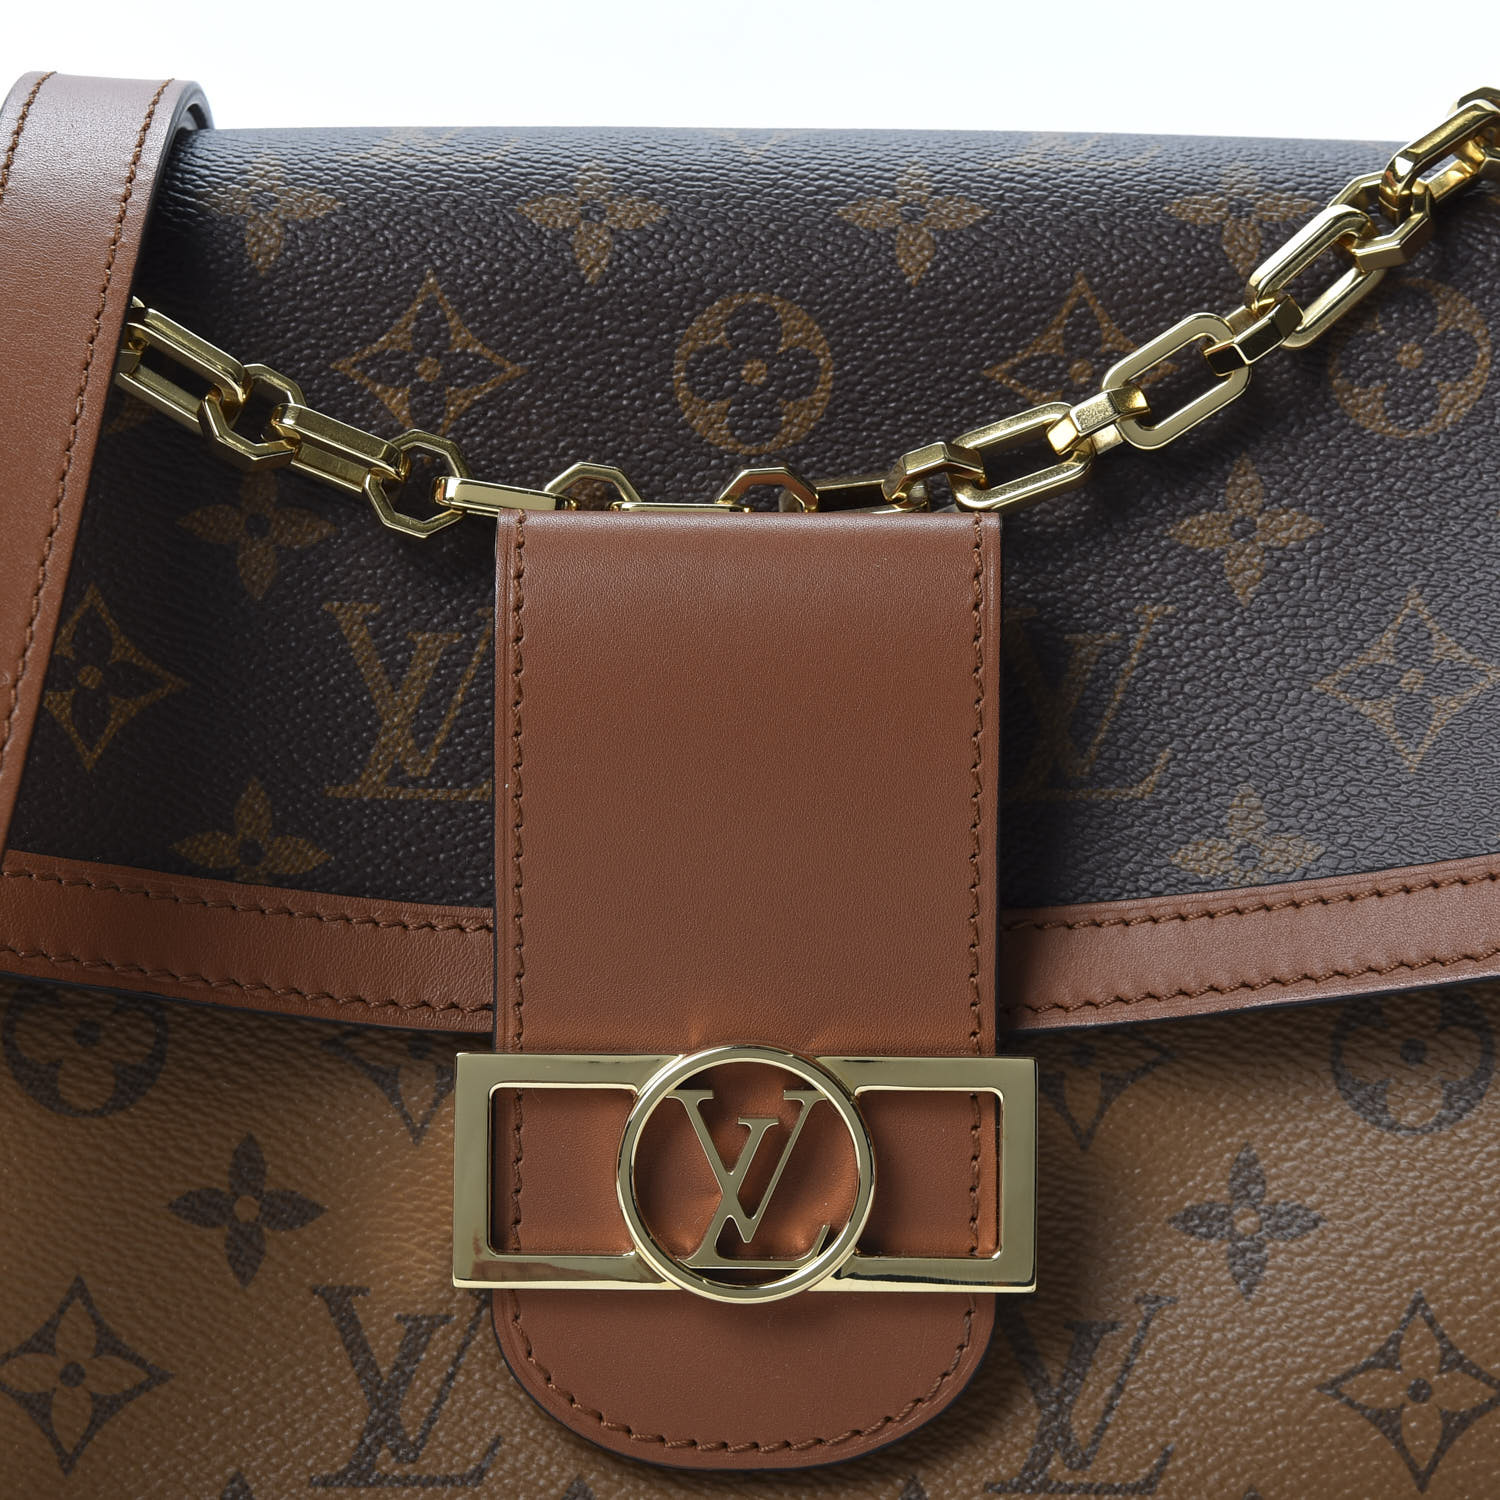 Sell Louis Vuitton Monogram Dauphine 25MM Reversible Belt - Brown